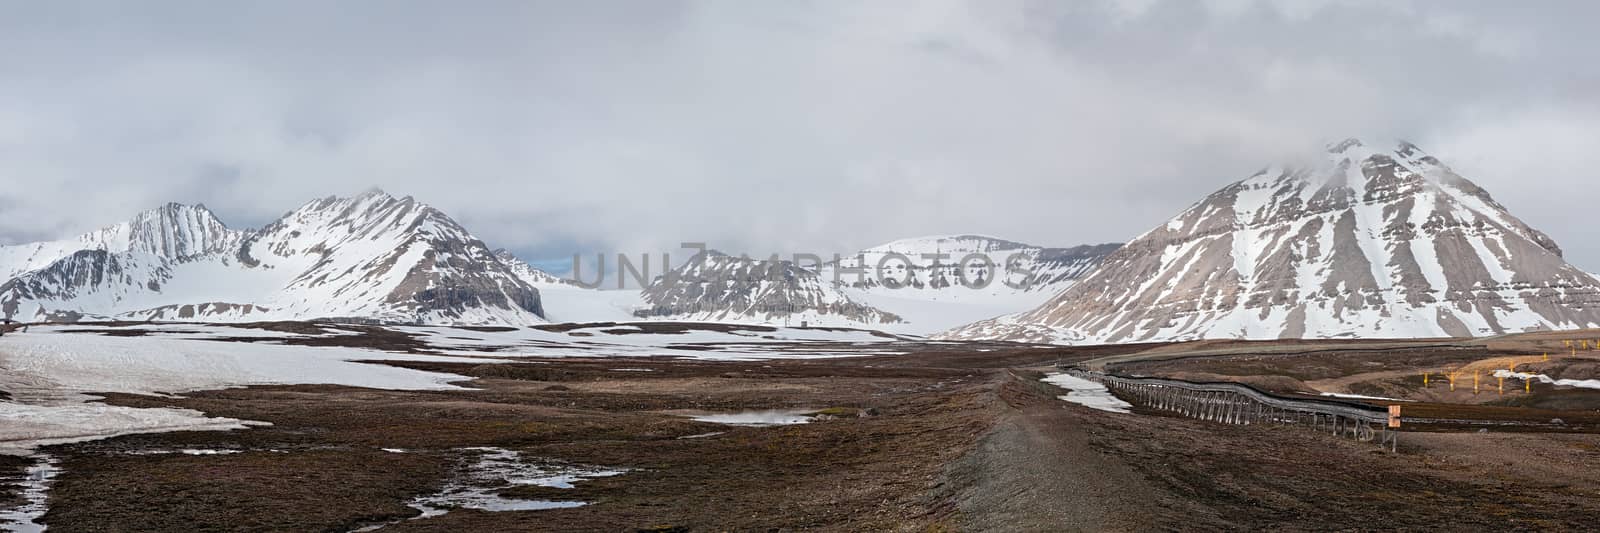 Mountain landscape in Ny Alesund, Svalbard islands by LuigiMorbidelli